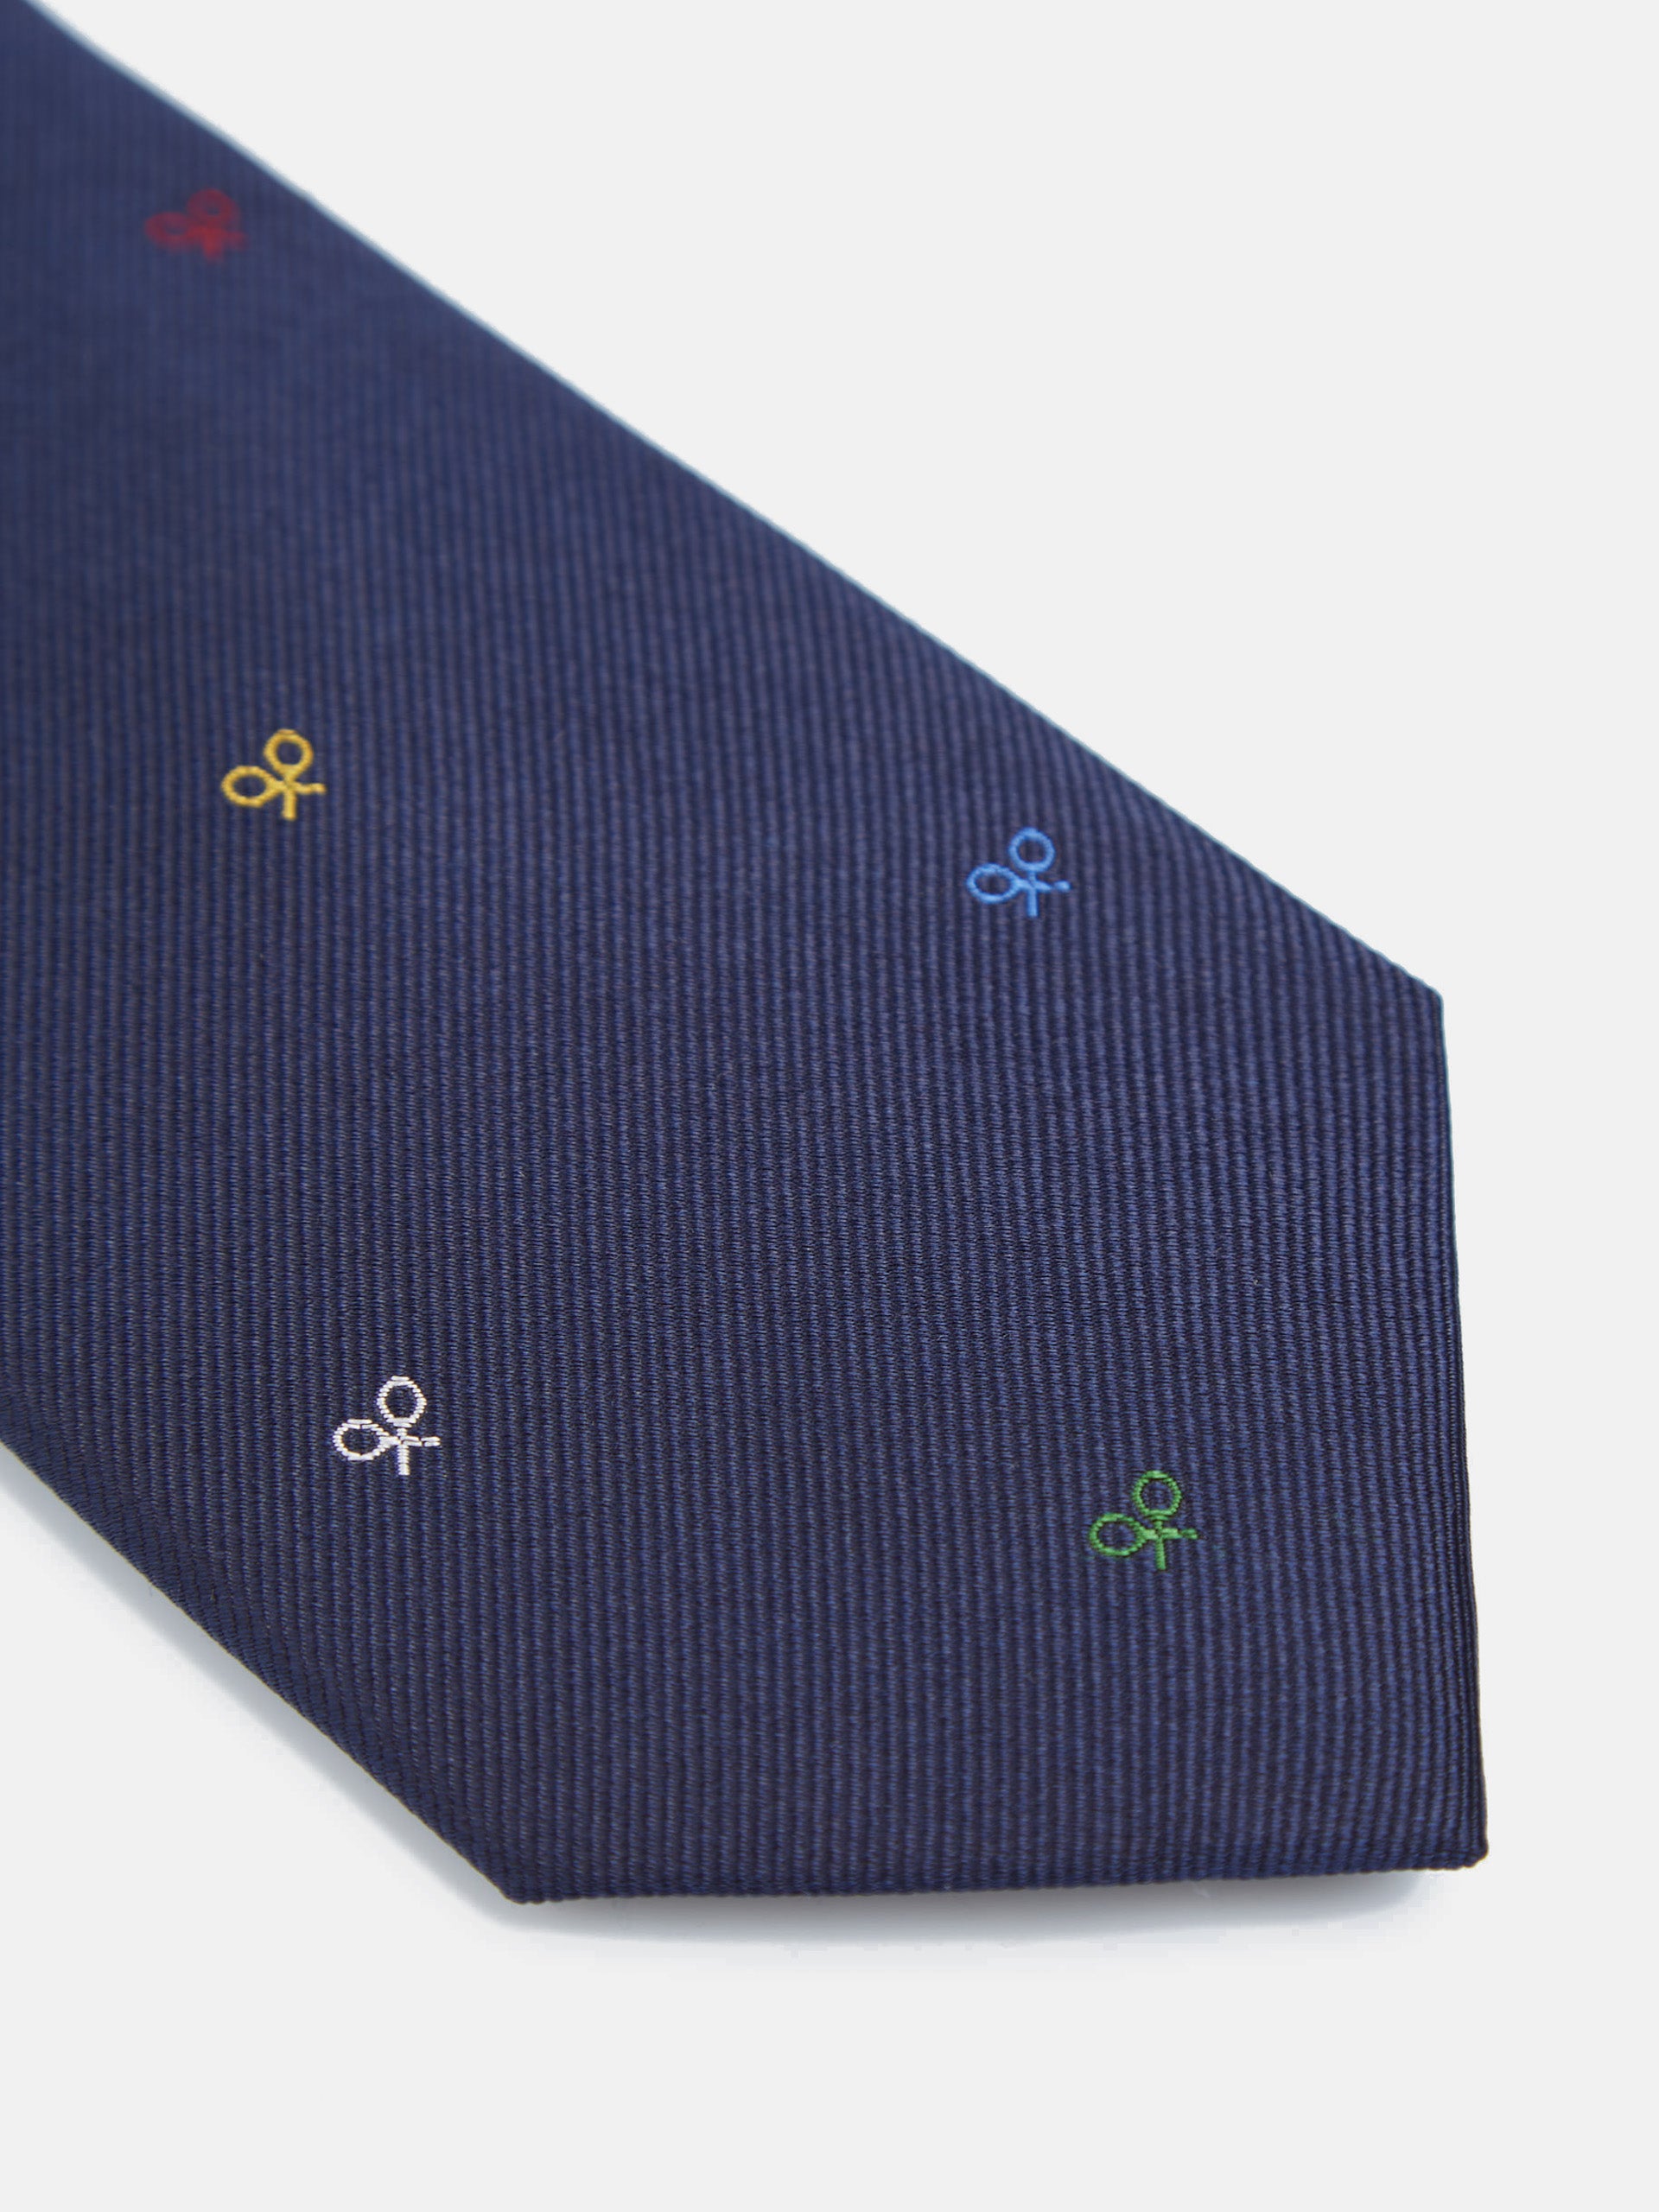 Silbon tie with multicolored racket motifs